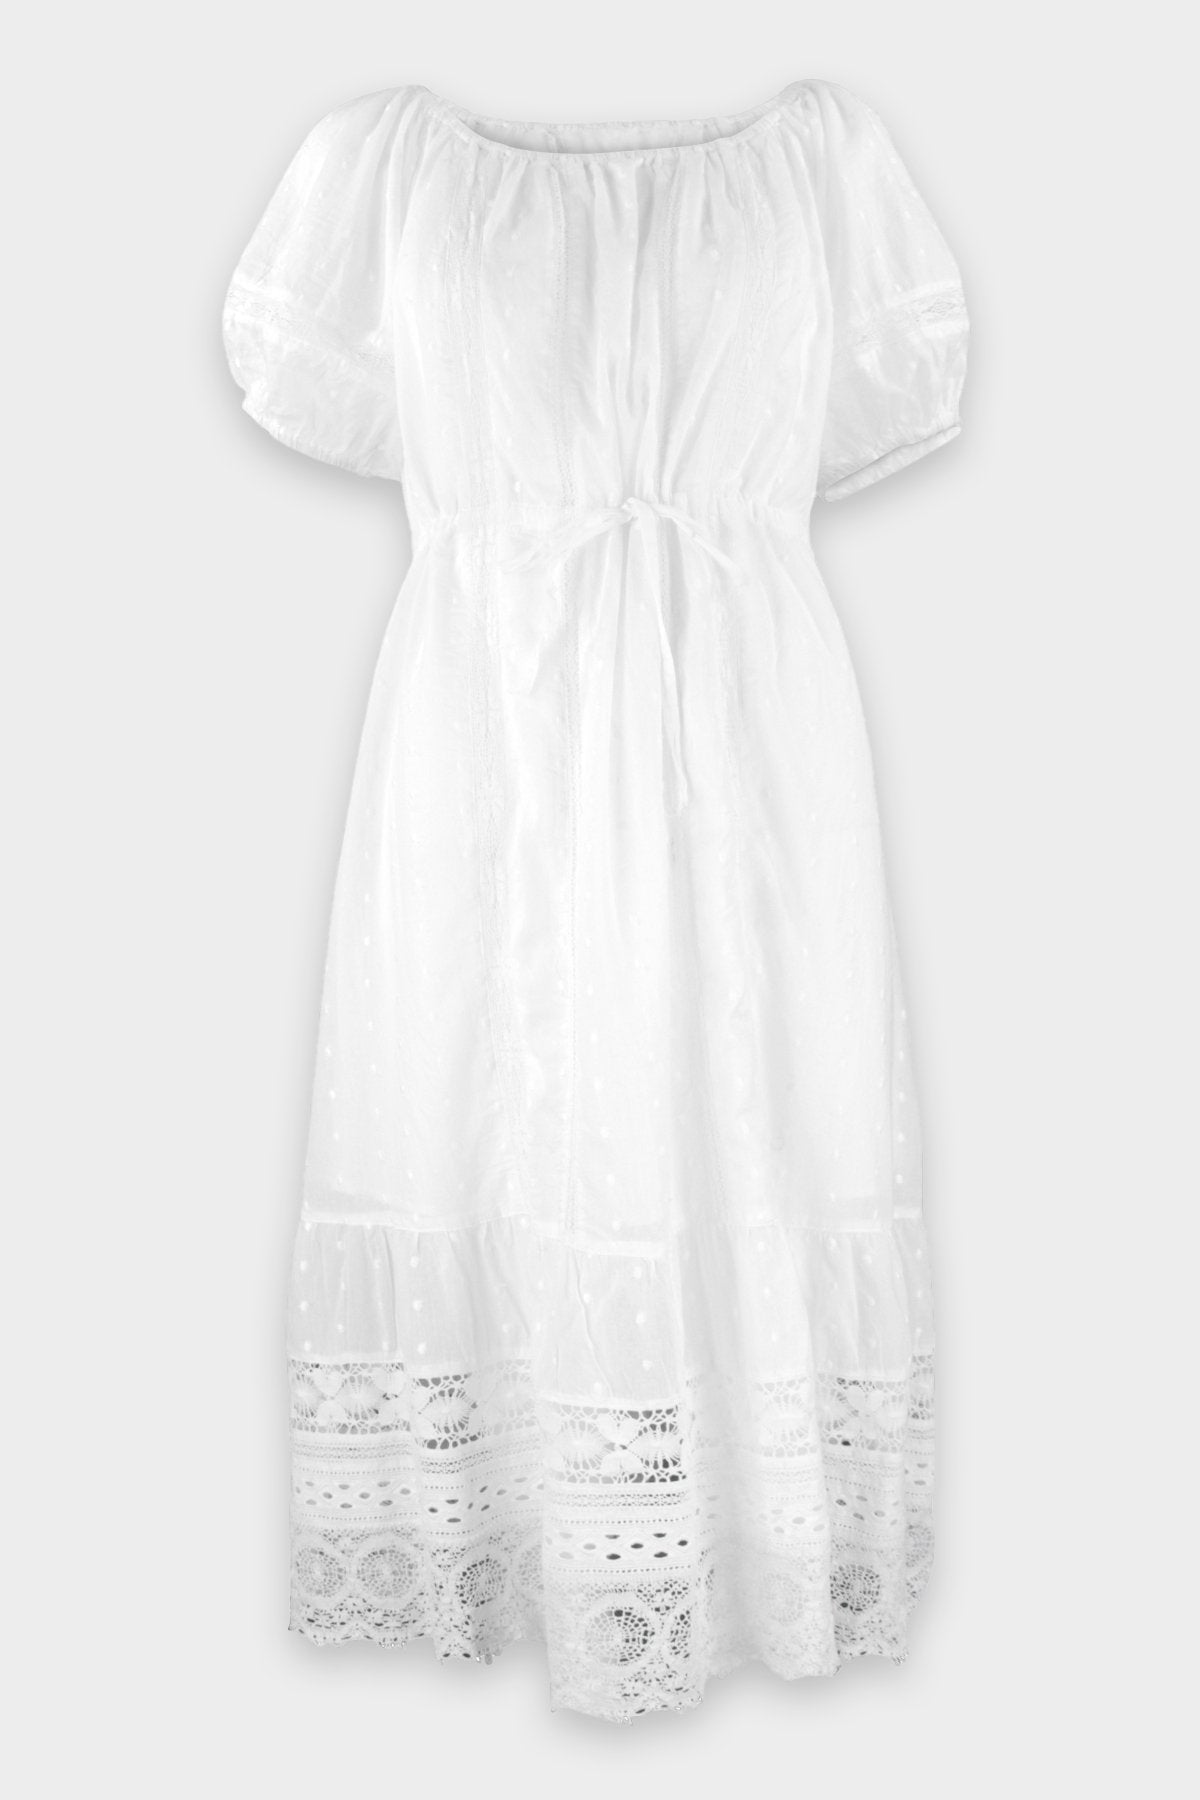 Adalyn Peasant Dress in White - shop-olivia.com